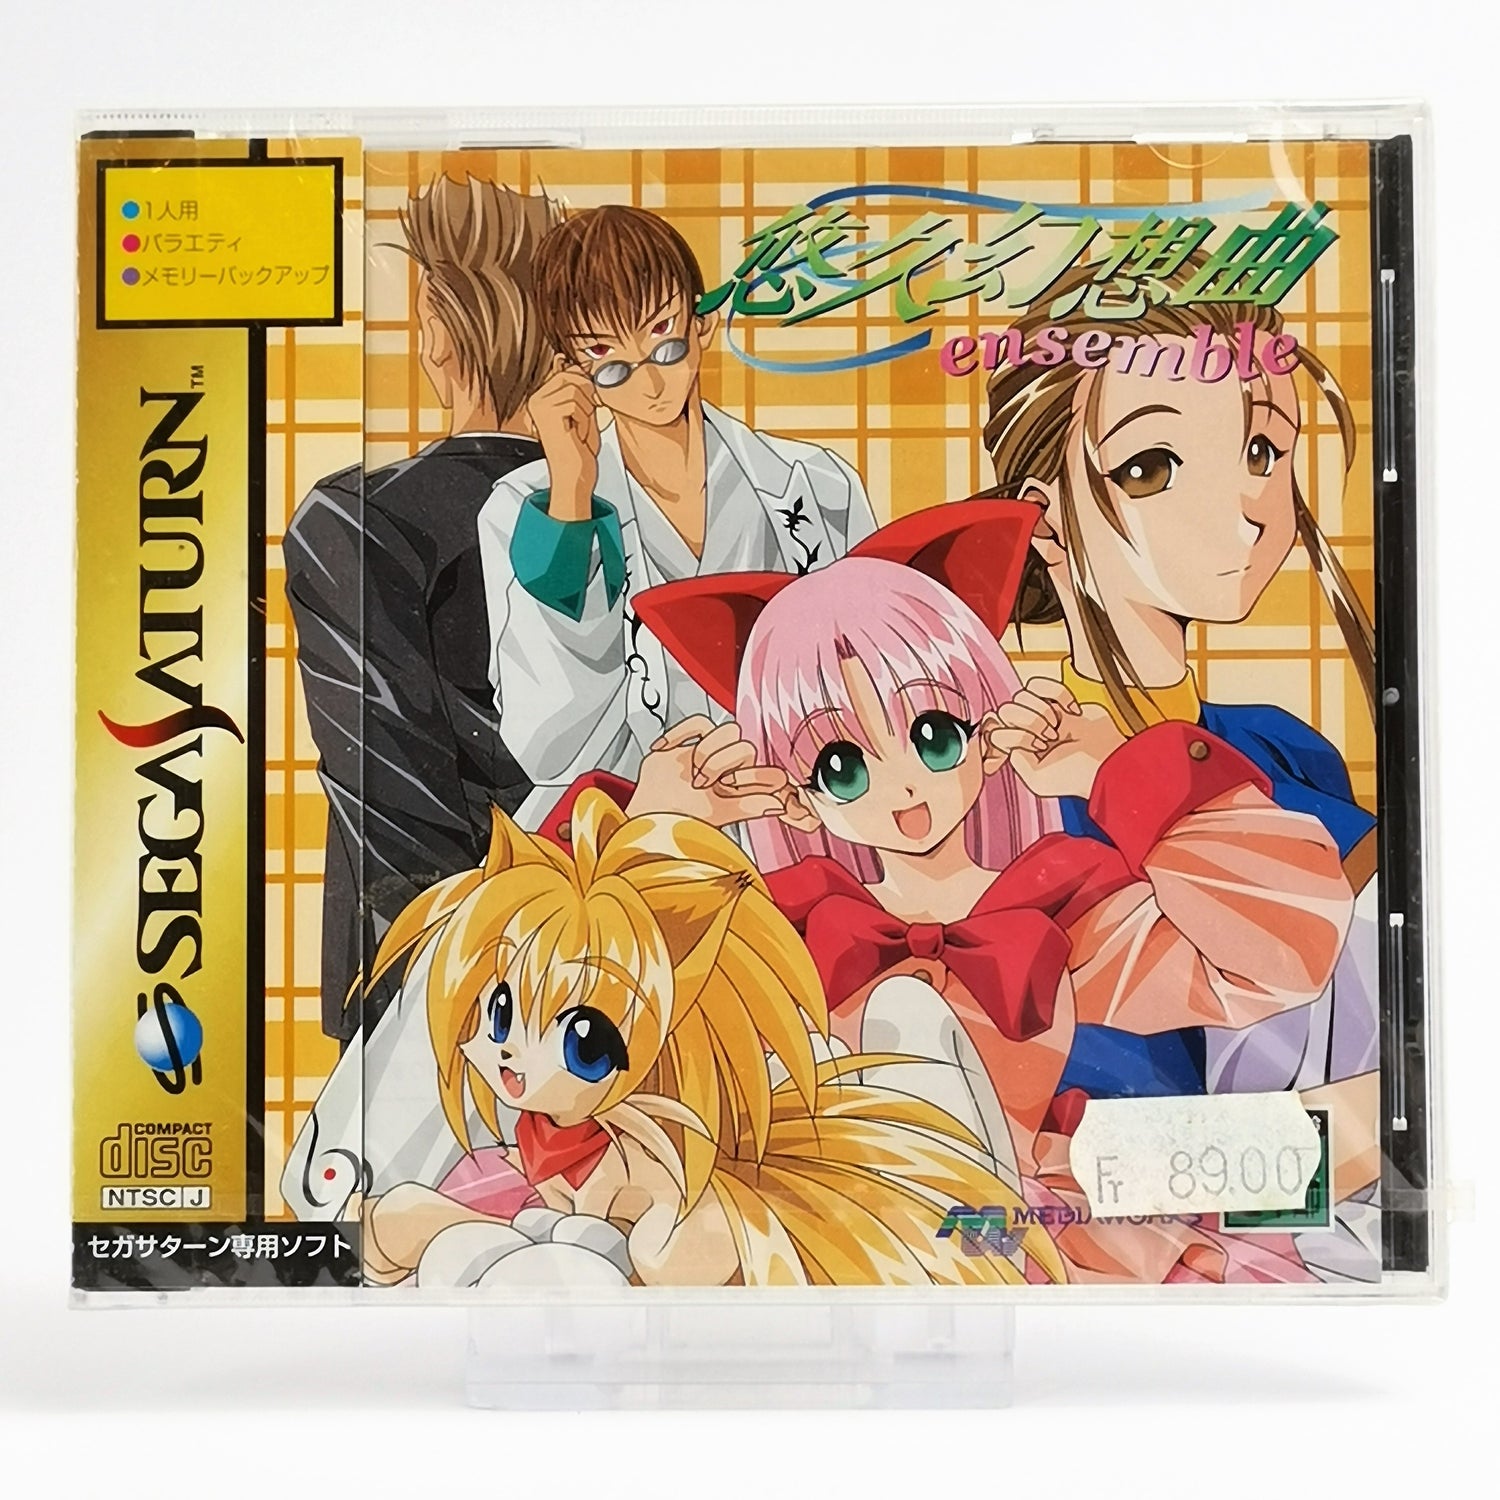 Sega Saturn Game : Yukyu Gensokyoku Ensemble | NTSC-J JAPAN - NEW SEALED OVP